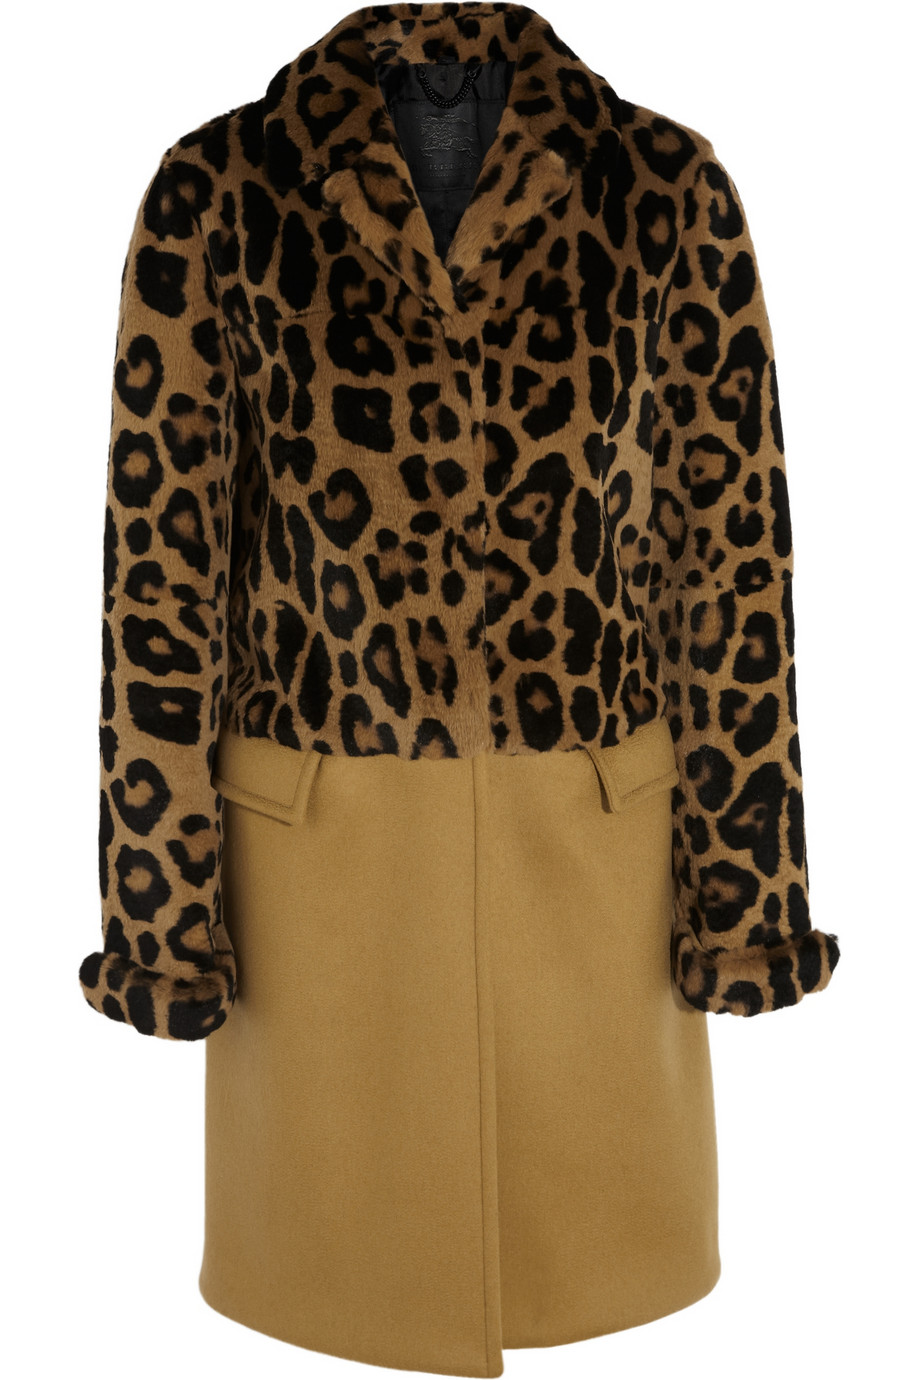 Burberry prorsum Leopard-print Rabbit and Cashmere-blend Coat in ...